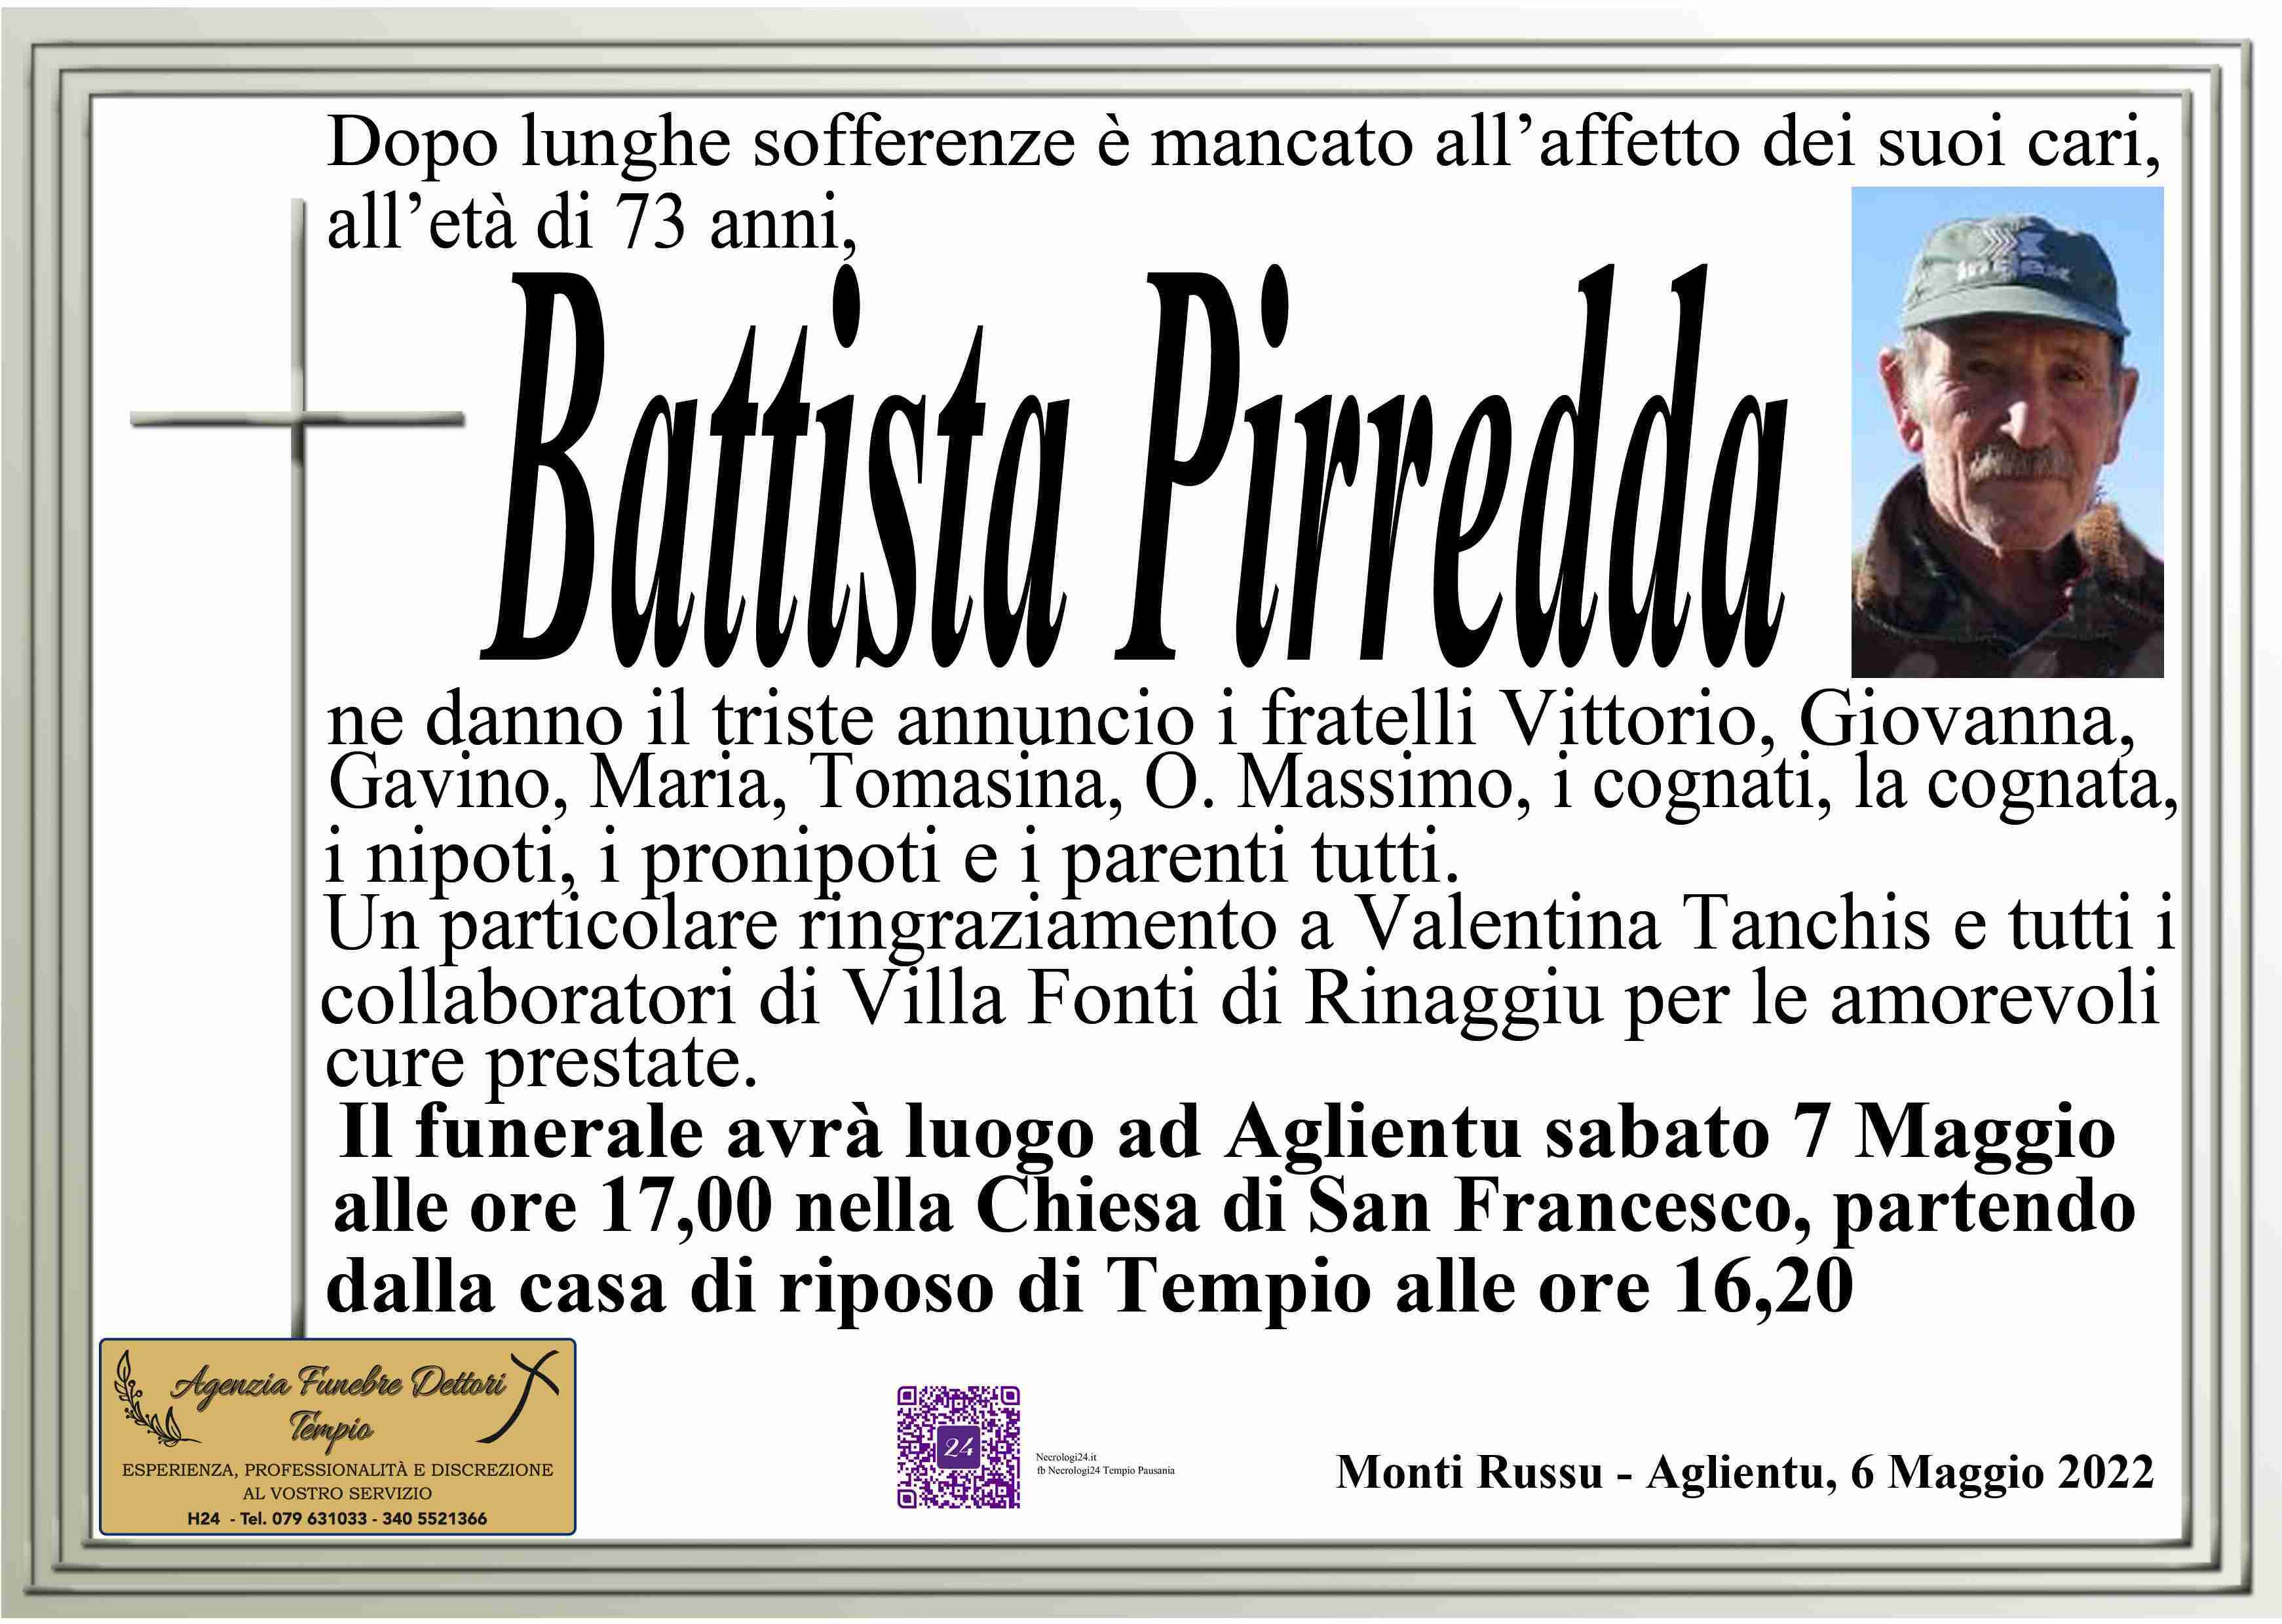 Battista Pirredda